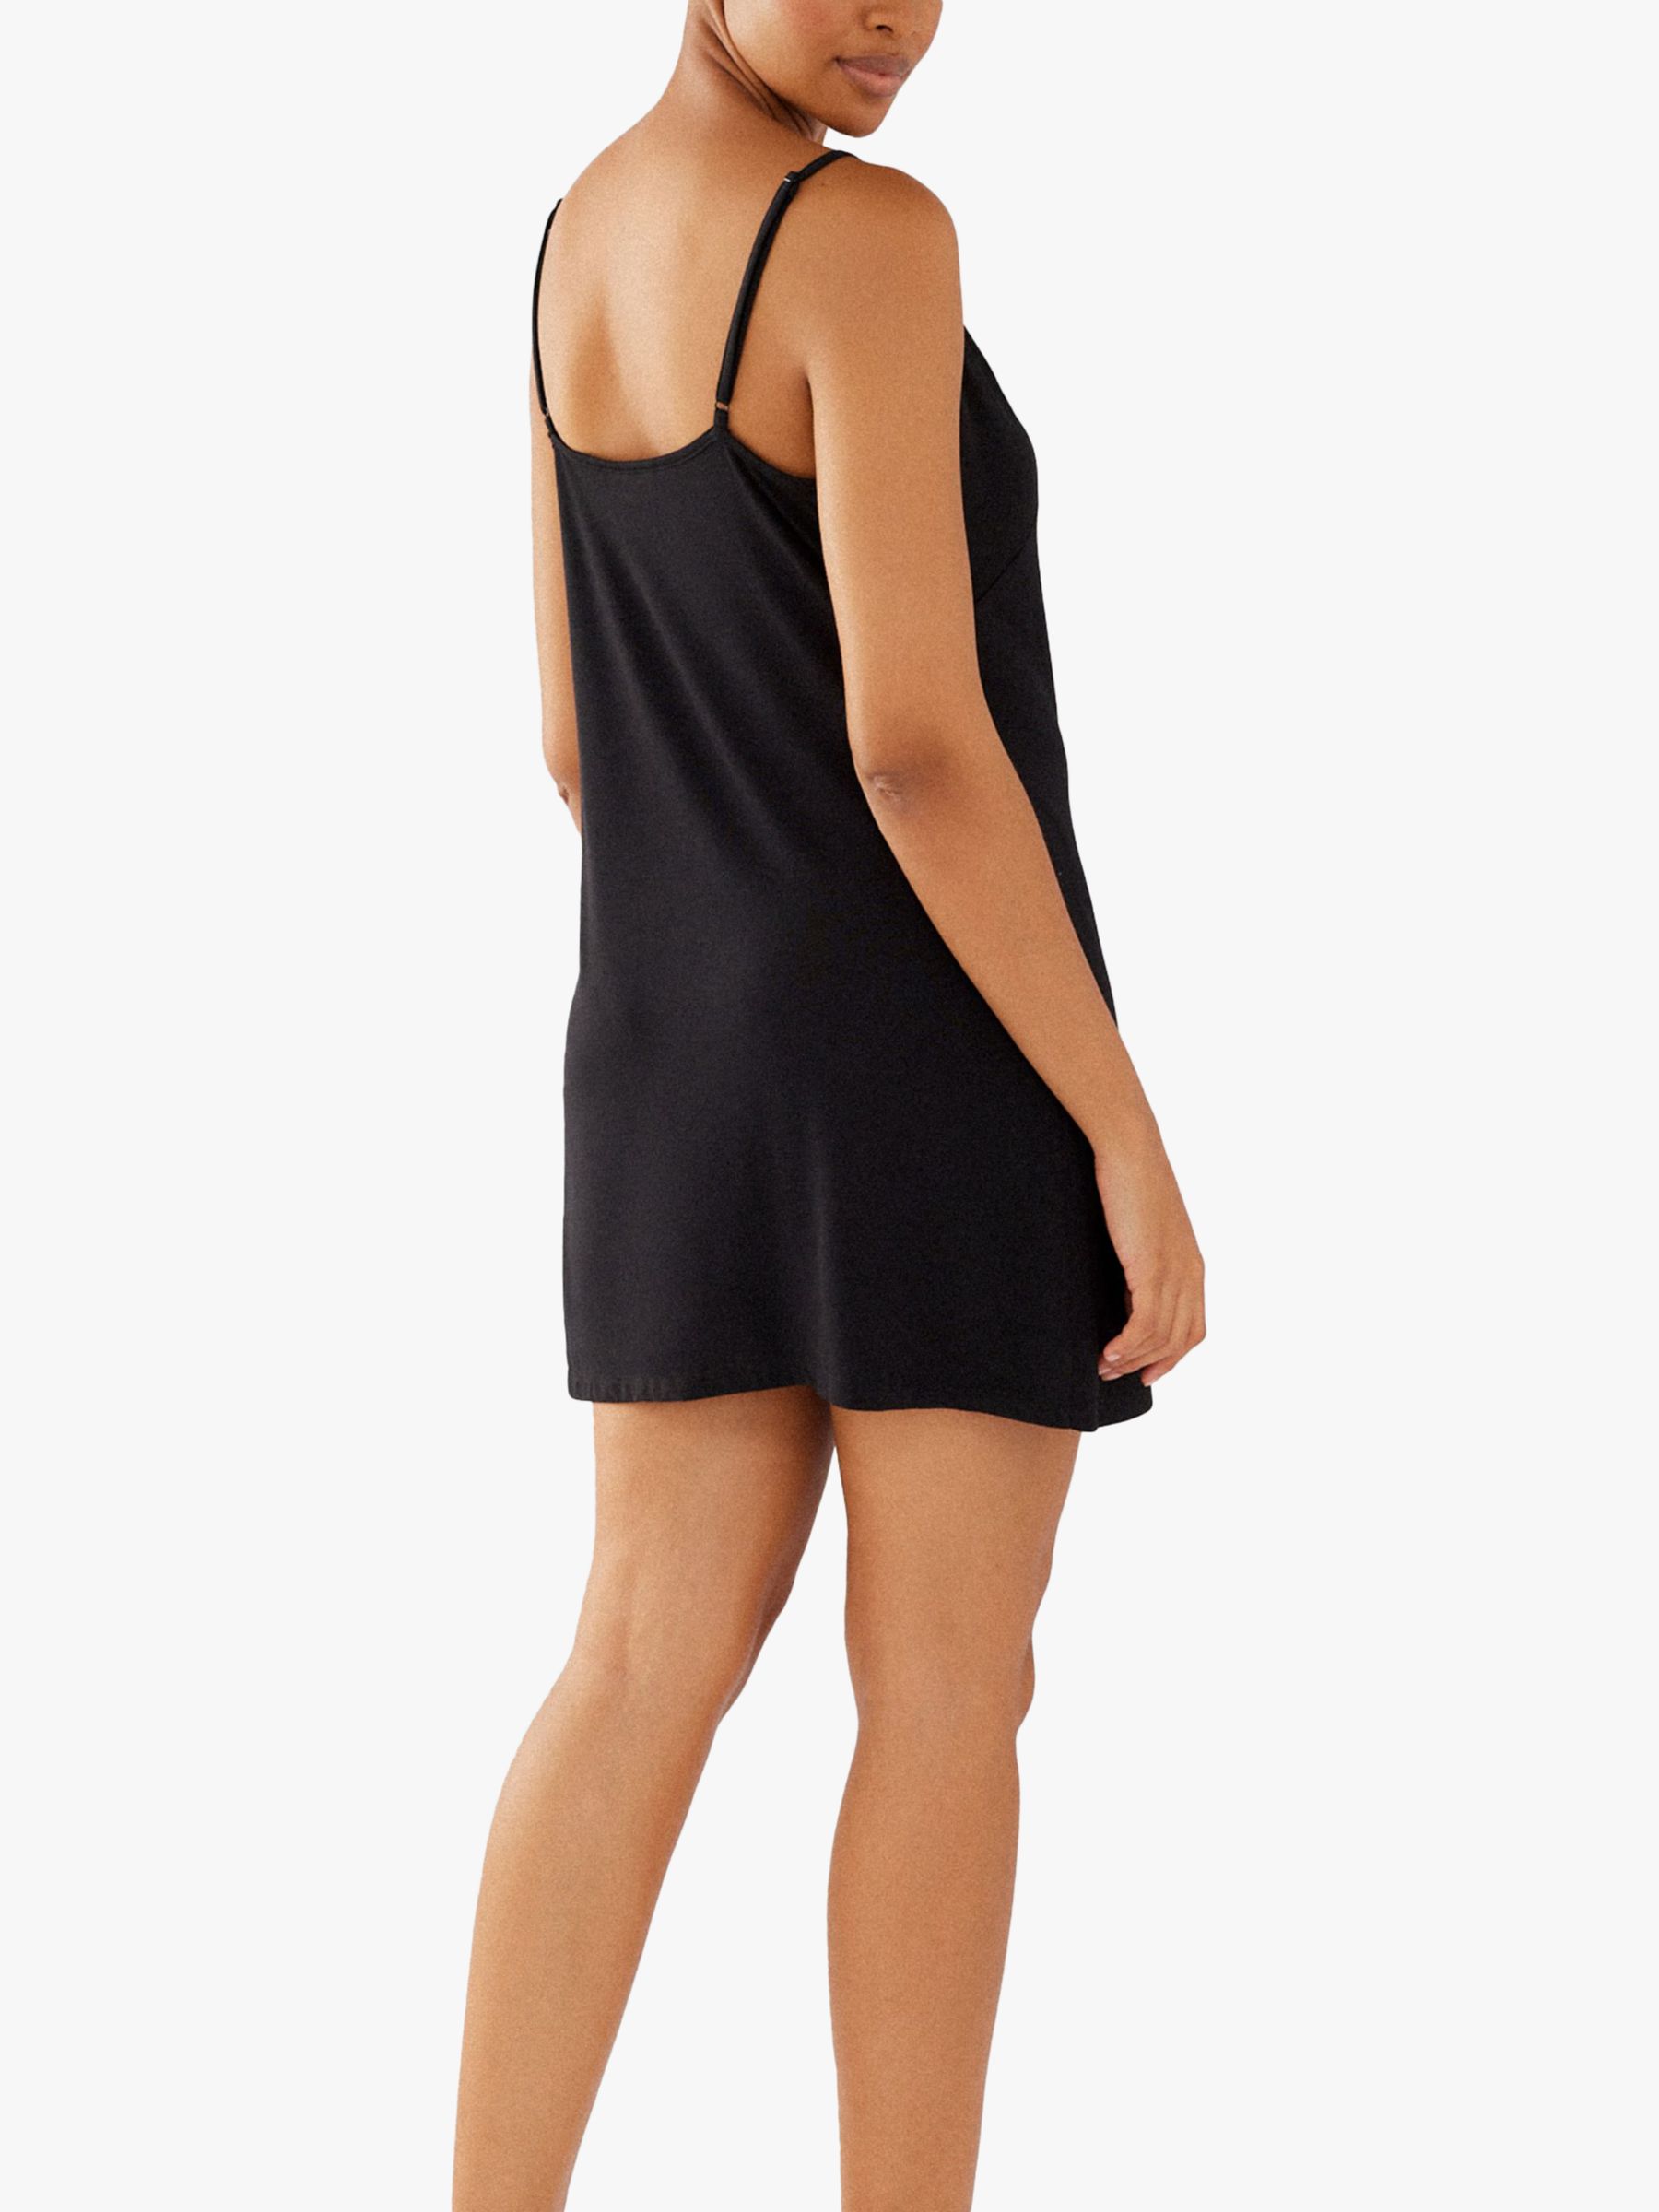 Chelsea Peers Modal Cami Night Dress , Black, XXS